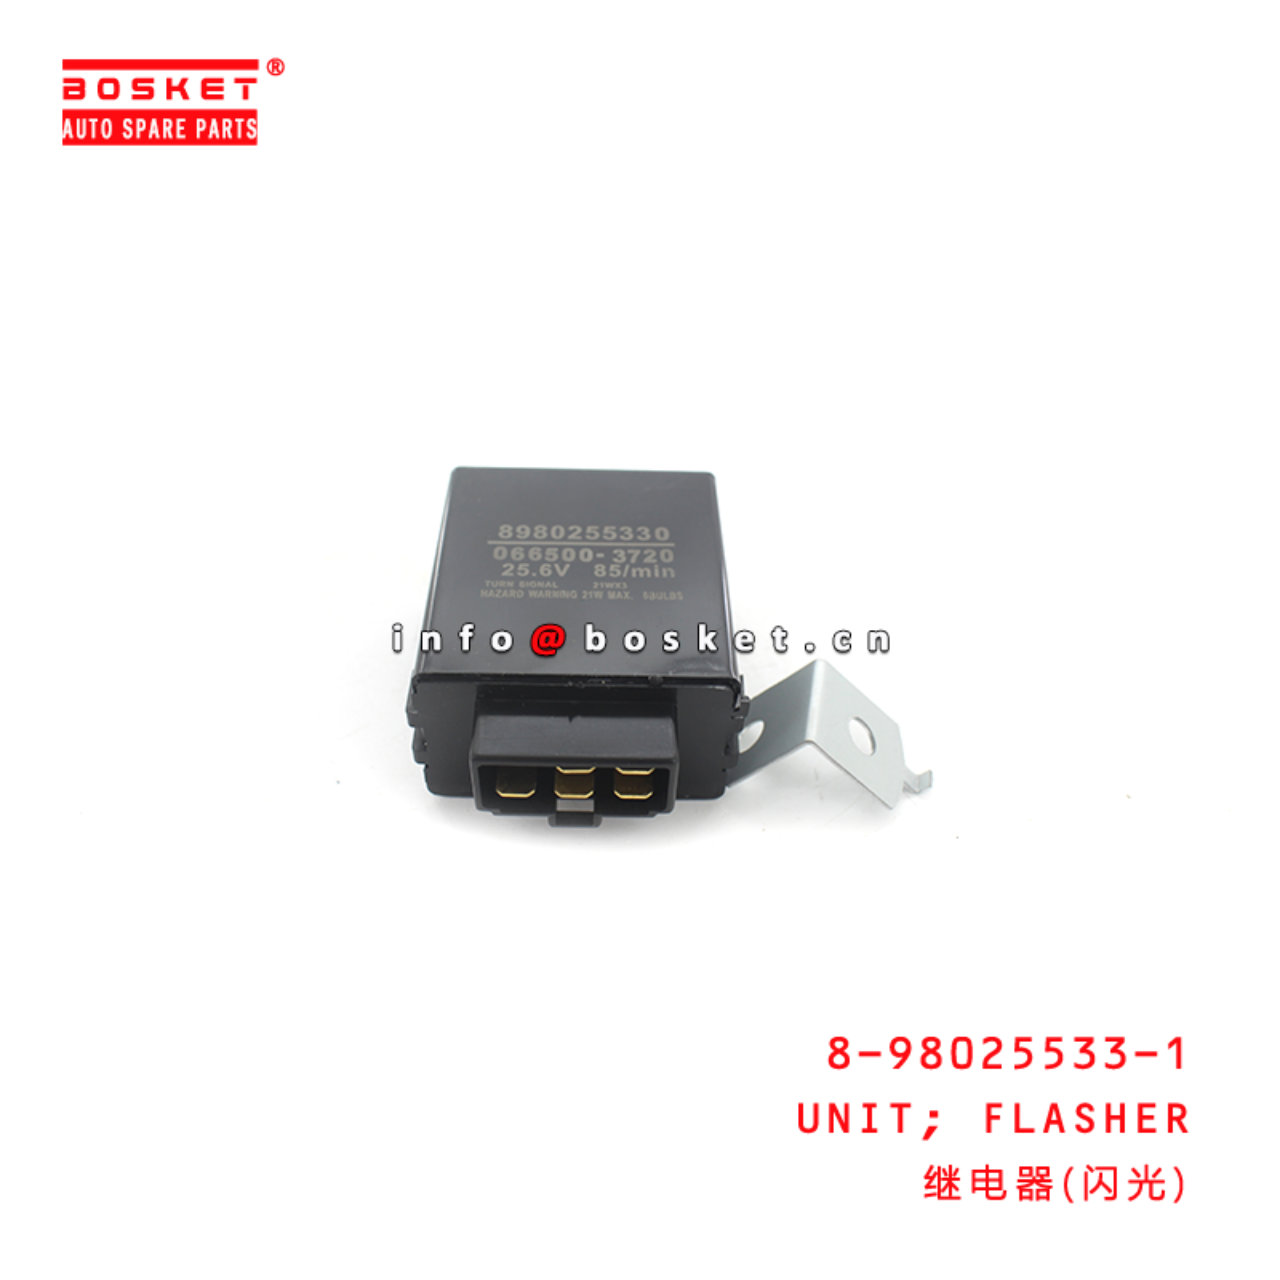 8-98025533-1 Flasher Unit Suitable for ISUZU 700P VC46 8980255331 